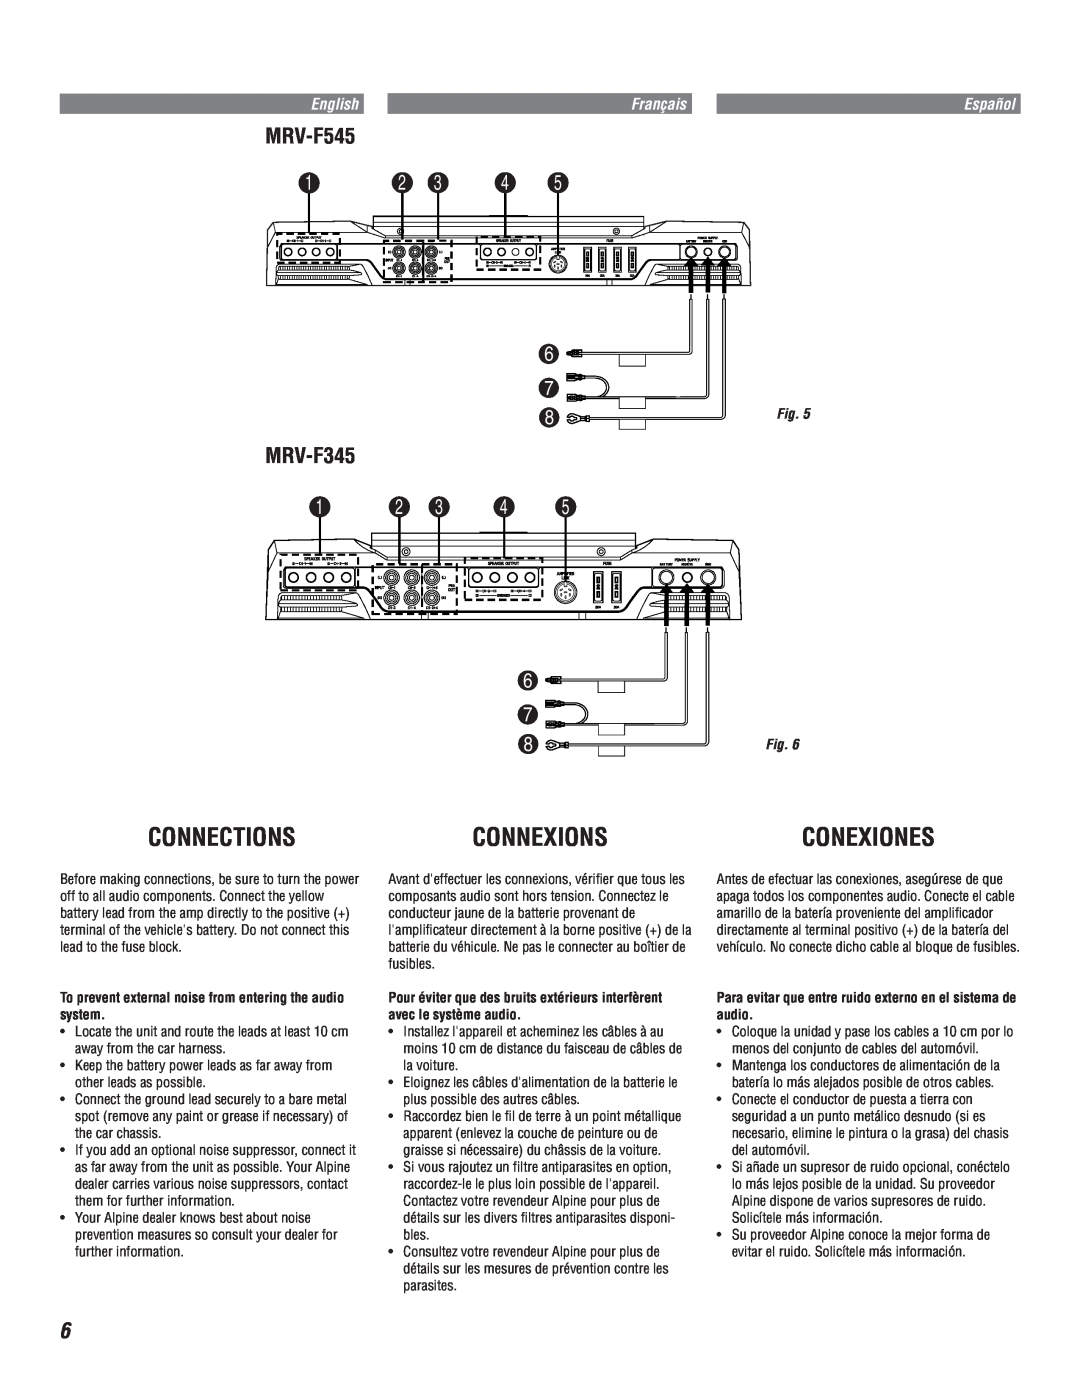 Alpine MRV-F545 owner manual Connections, Connexions, MRV-F345, Conexiones 